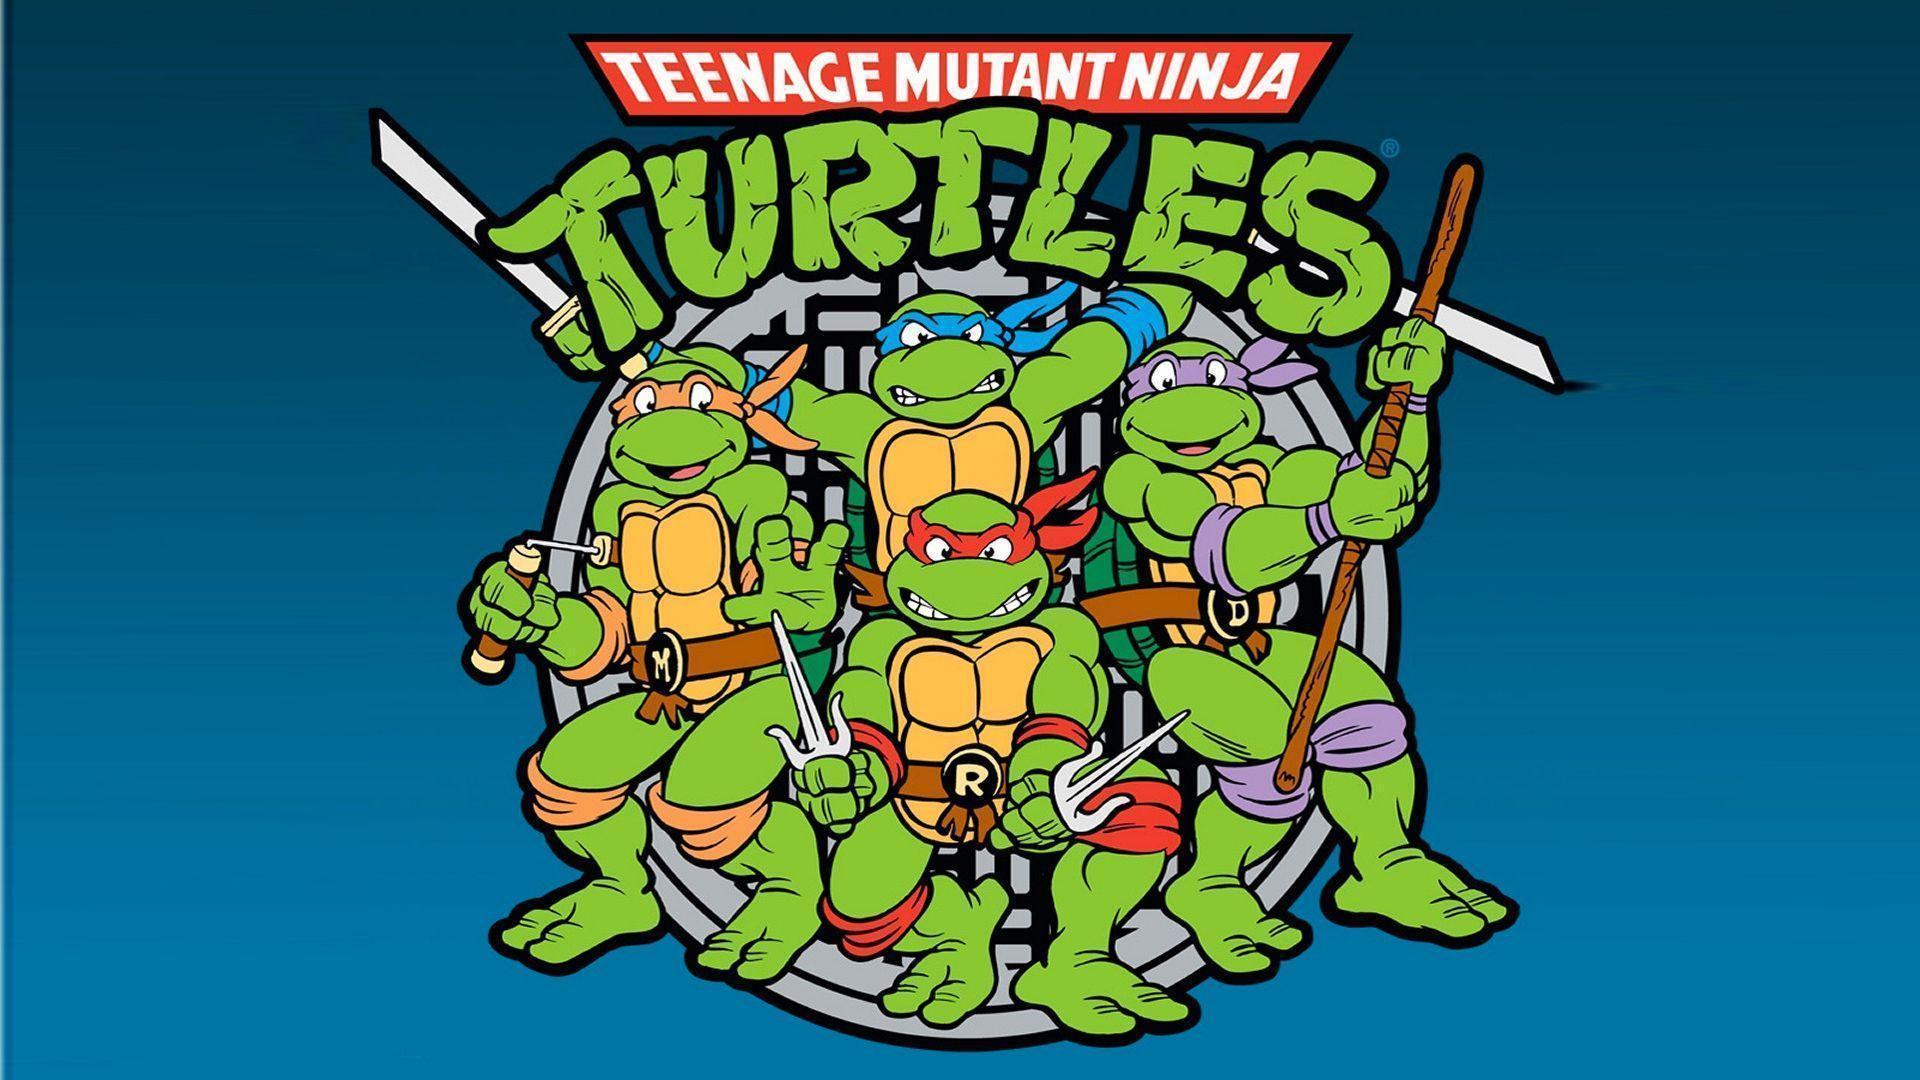 Rumour: Platinum Games to develop Teenage Mutant Ninja Turtles